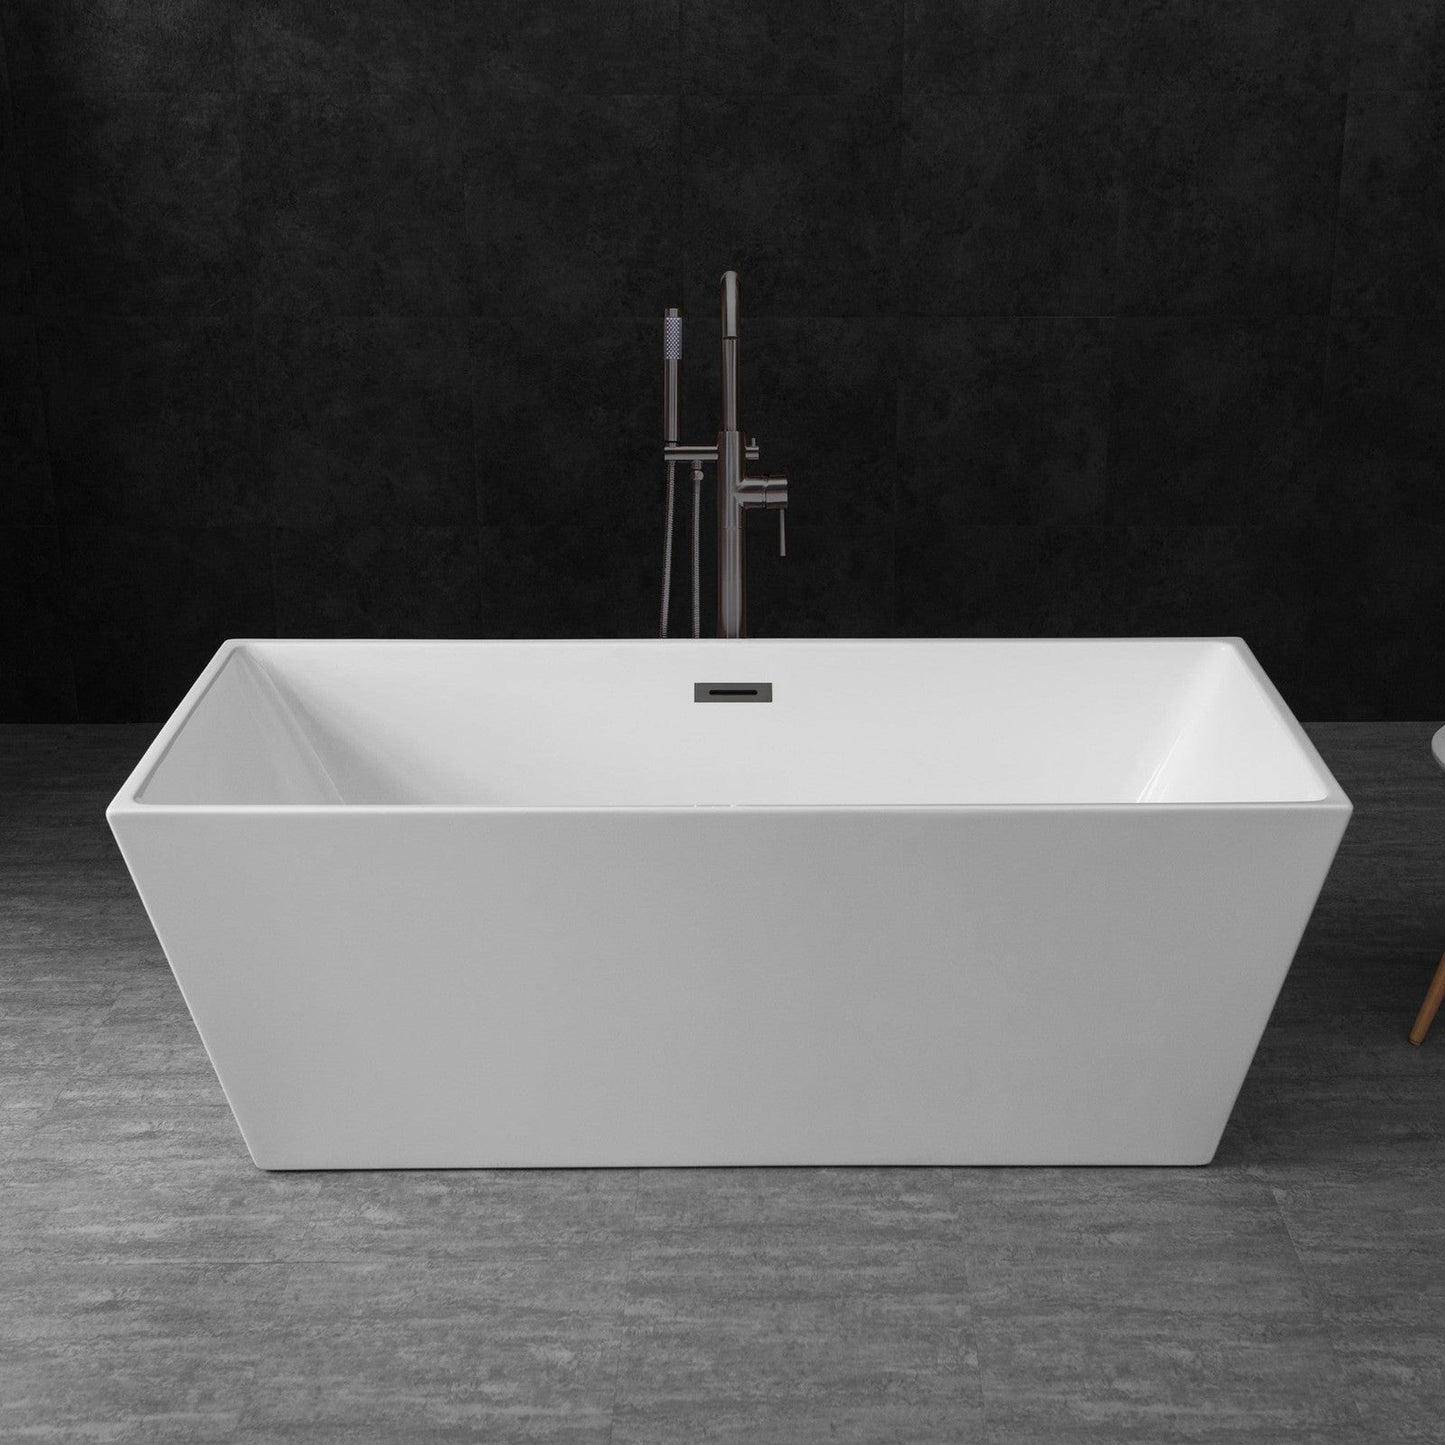 WoodBridge B0003 67" White Acrylic Freestanding Soaking Bathtub With Matte Black Drain, Overflow, F0072MBVT Tub Filler and Caddy Tray